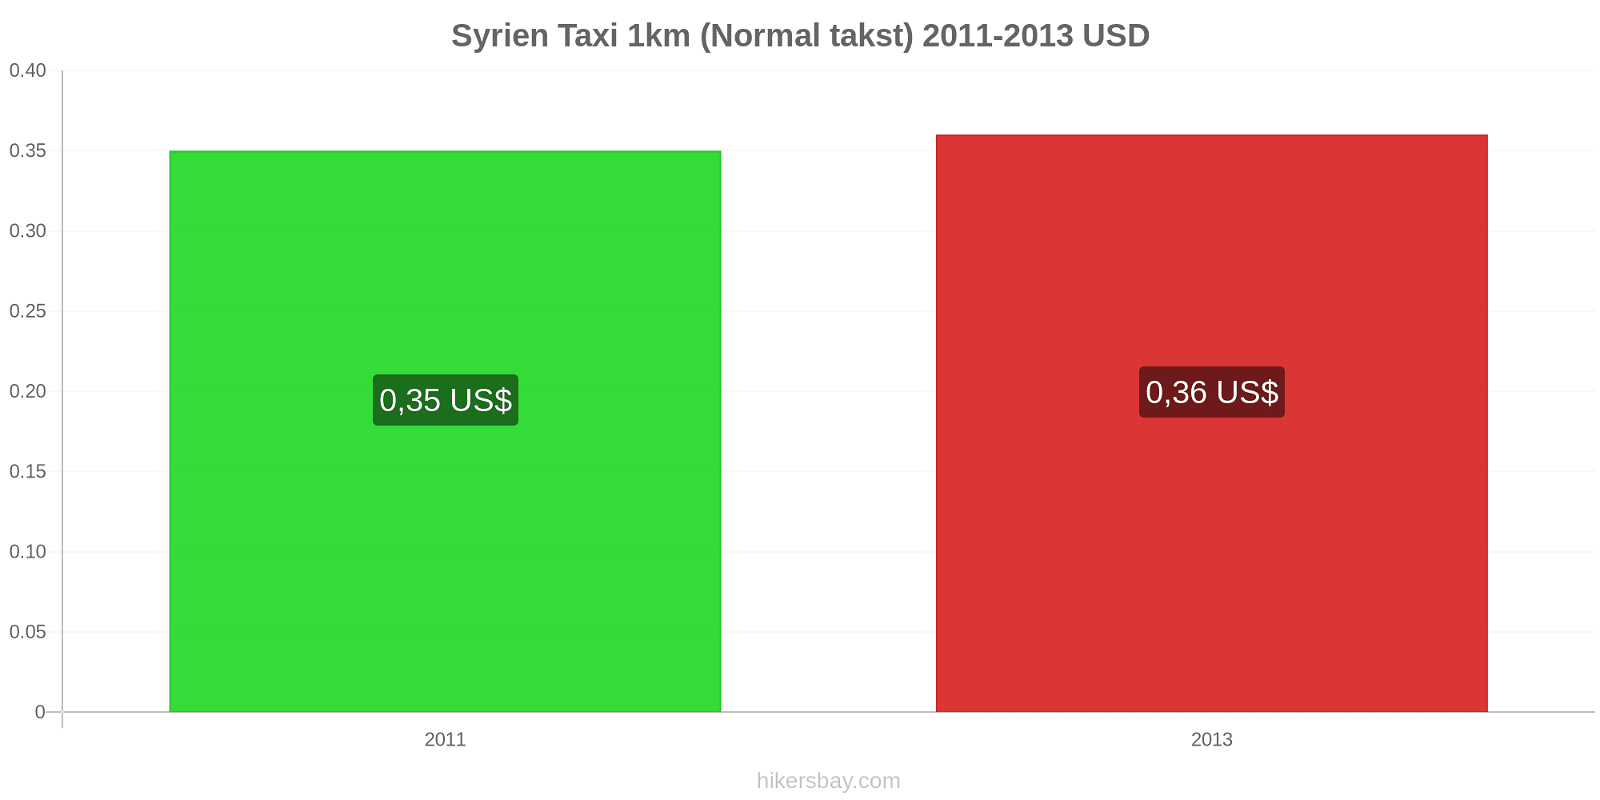 Syrien prisændringer Taxi 1km (normal takst) hikersbay.com